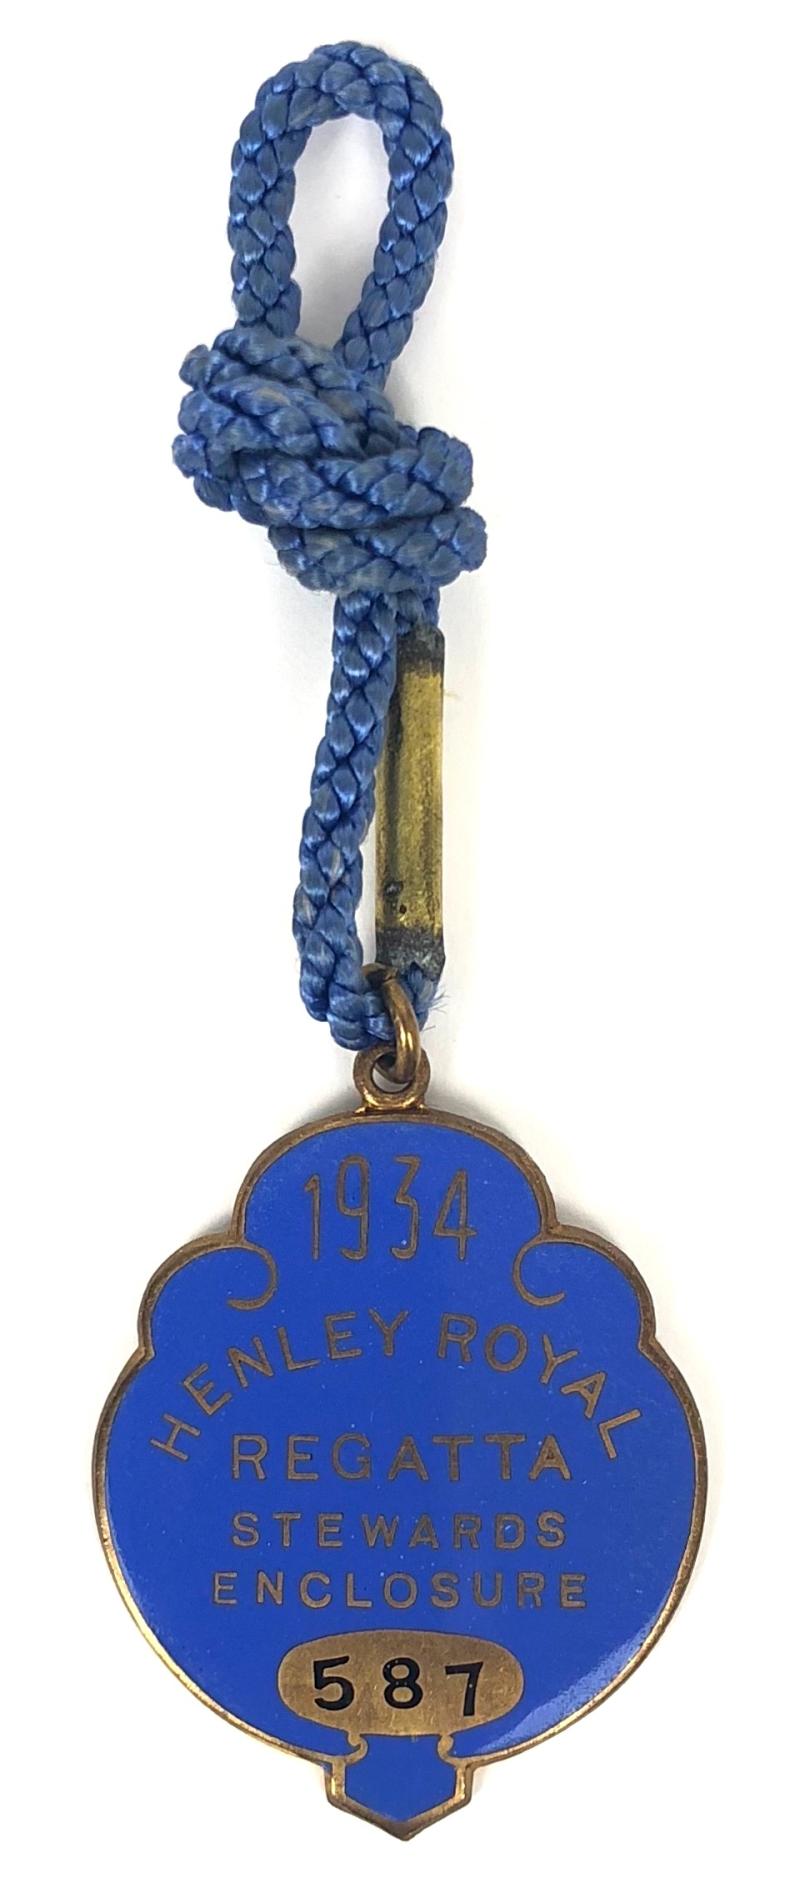 1934 Henley Royal Regatta Stewards Enclosure badge